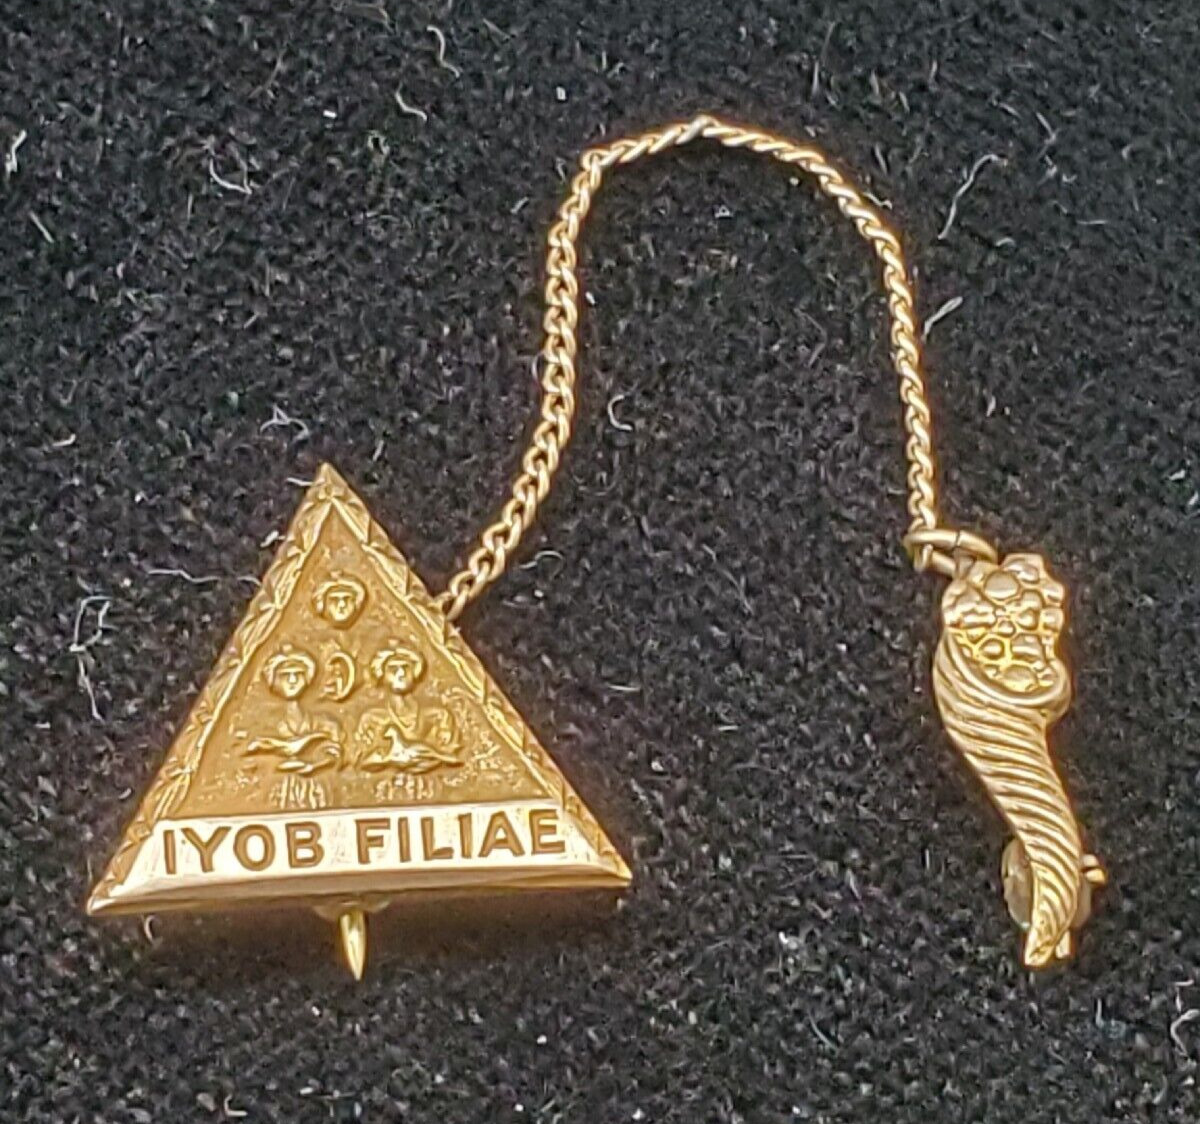 Vintage IYOB FILIAE Masonic Pin 10K Yellow Gold Top Job\'s Daughter